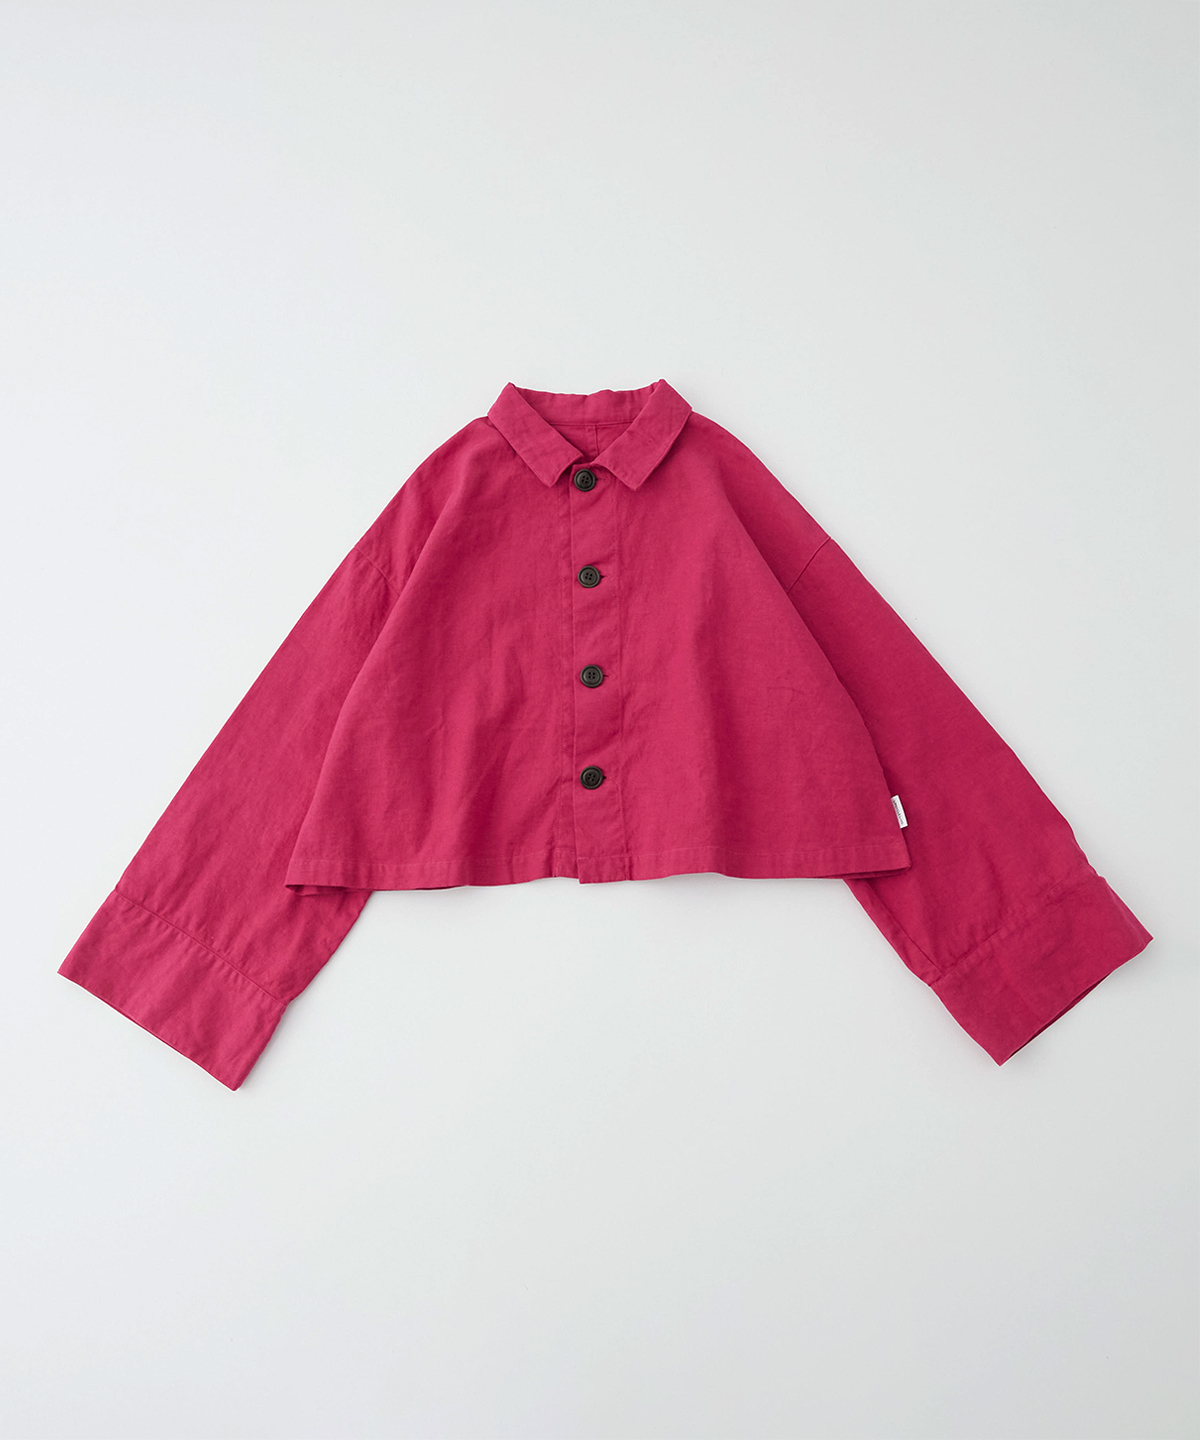 UpcycleLino】FRESH STATION shirt jacket｜nest Robe ONLINE SHOP